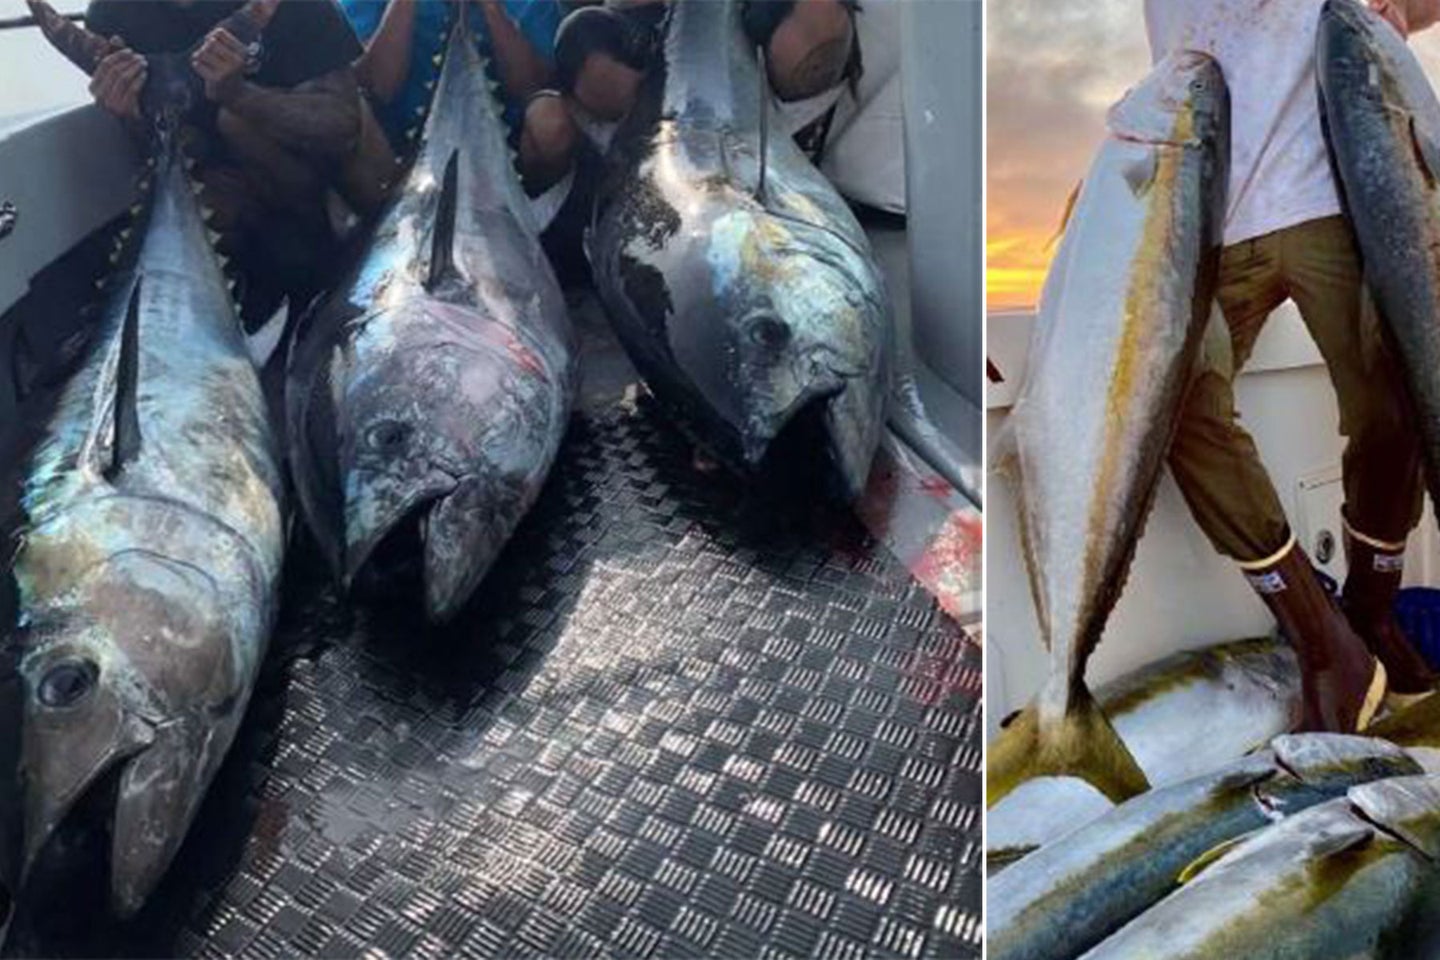 Poachers pose will fish illegally sold in California.